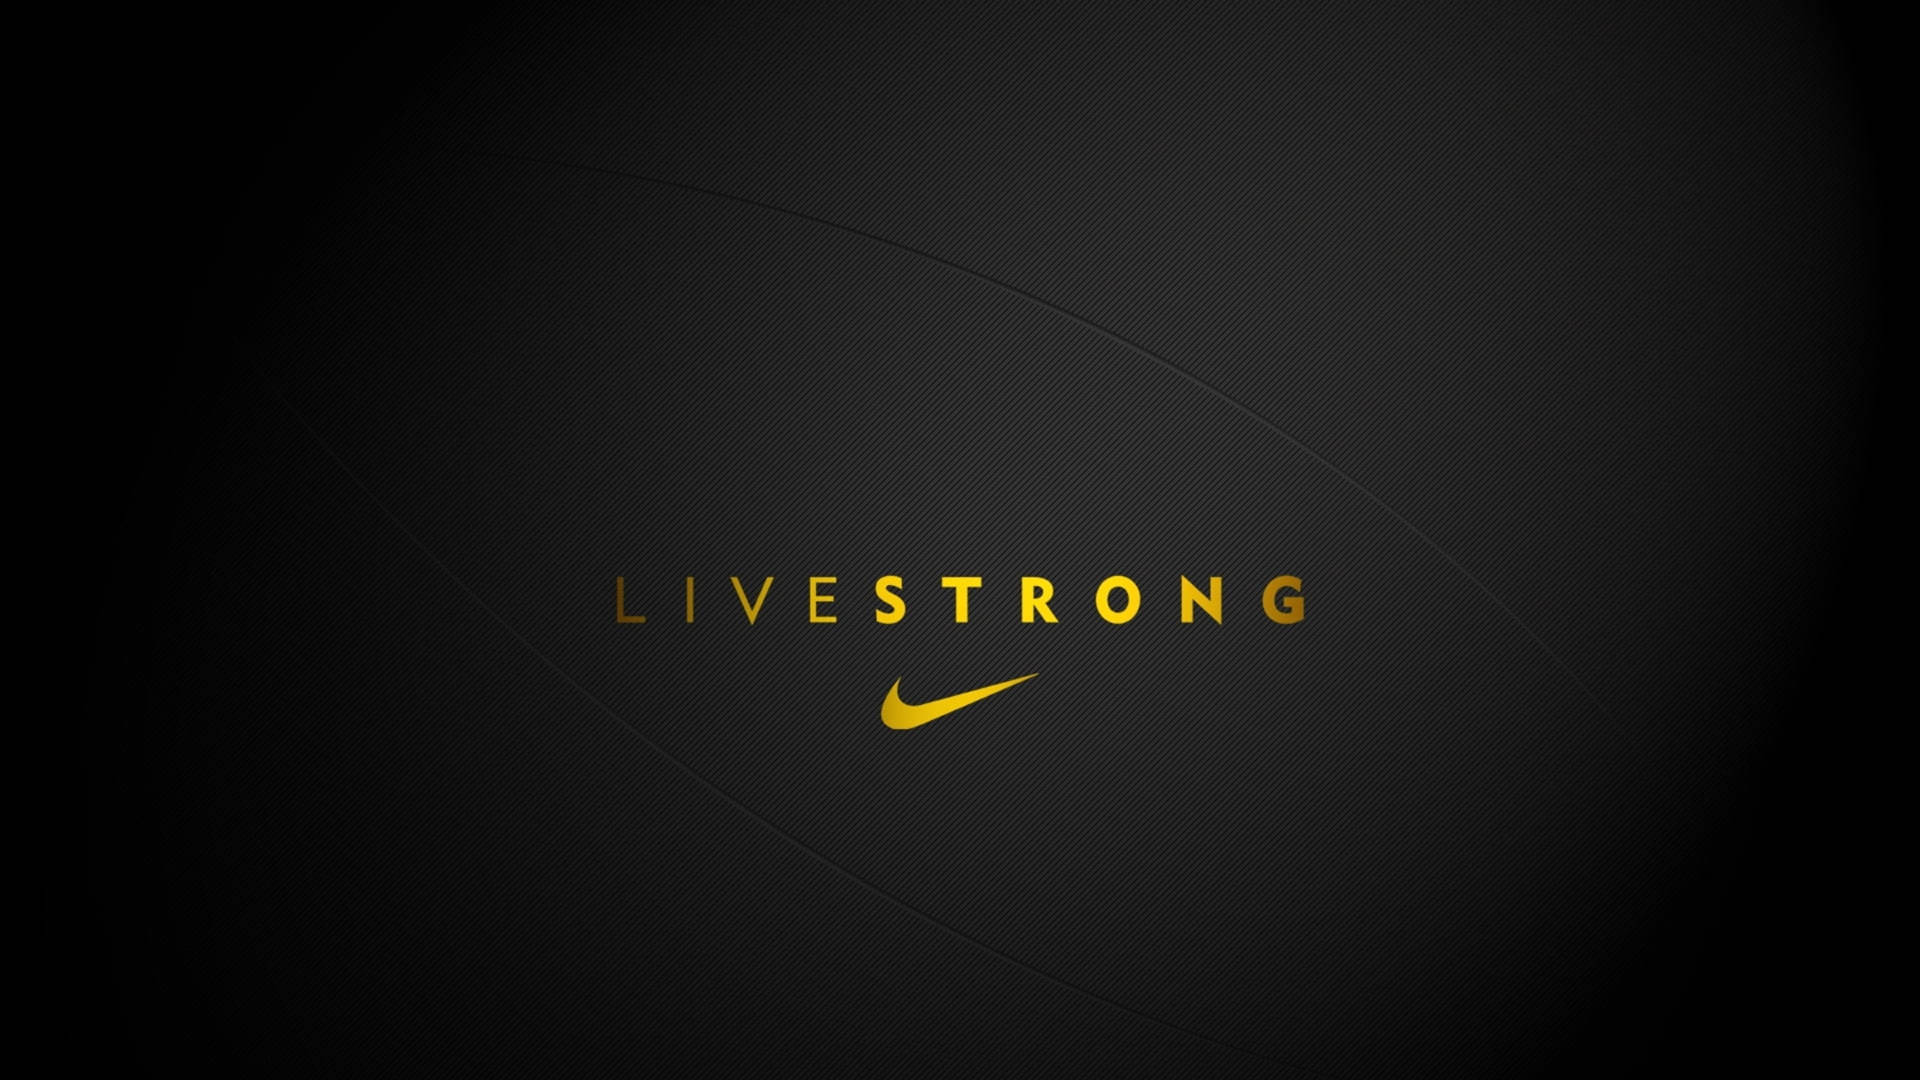 Papelde Parede Nike Live Strong Preto E Dourado. Papel de Parede